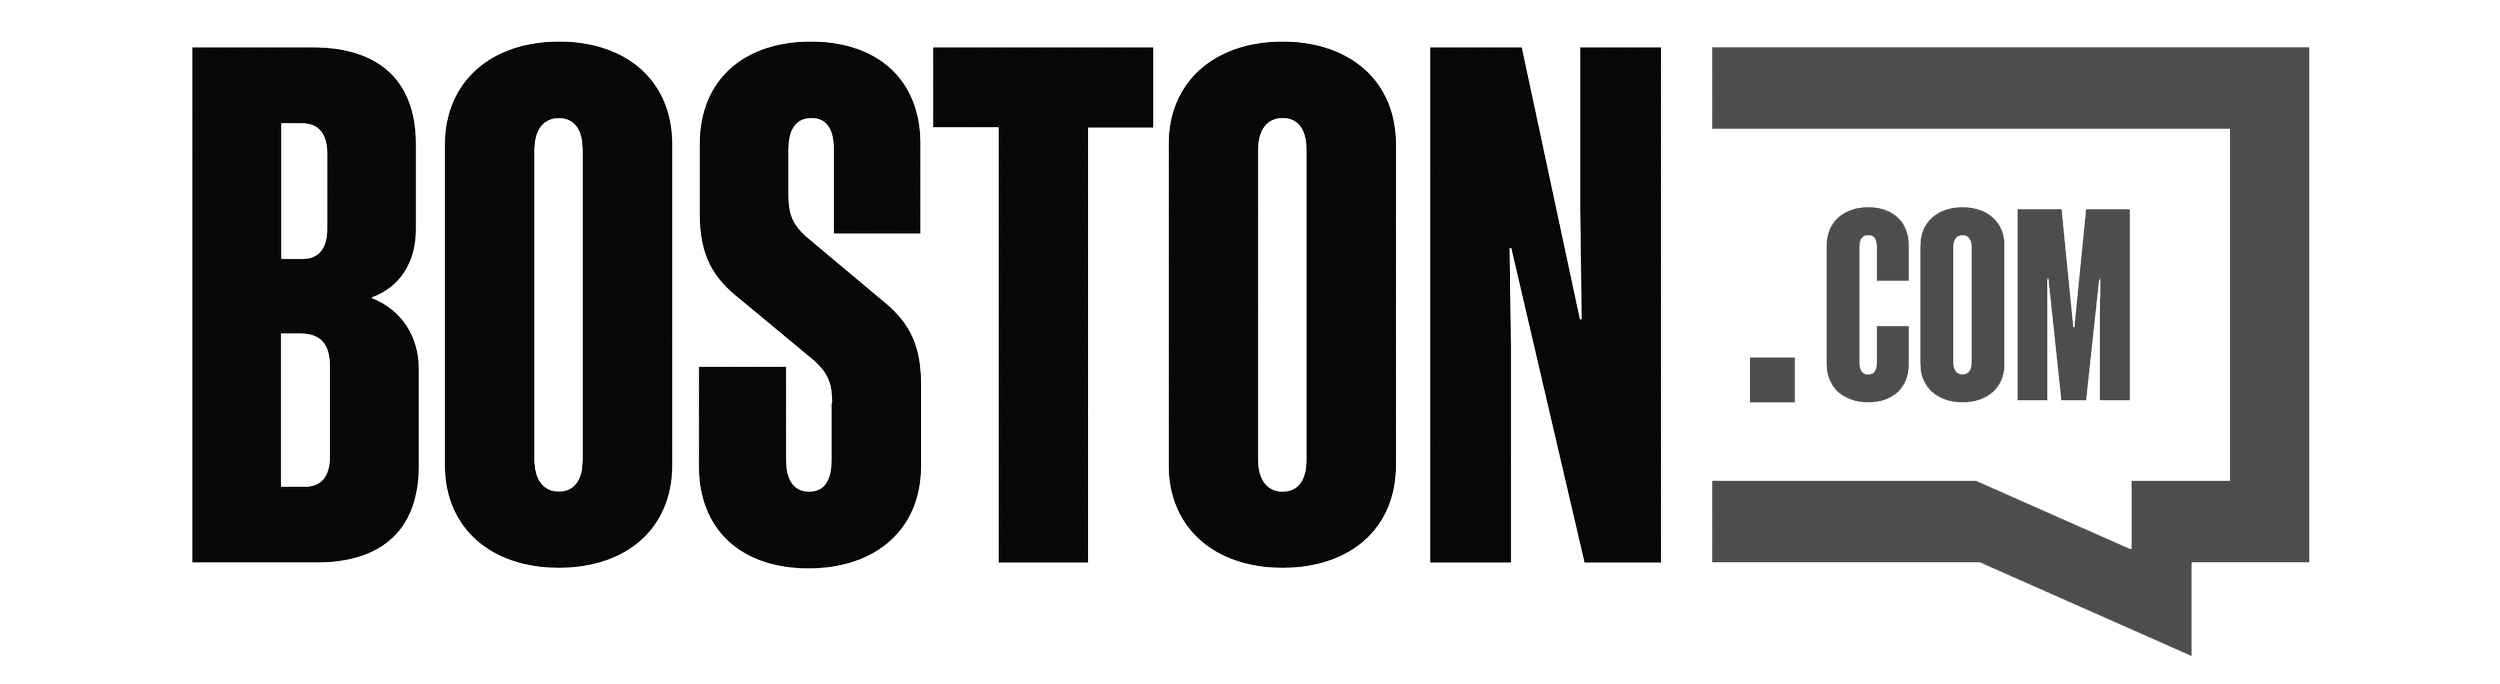 Boston.com-Logo-grey.png